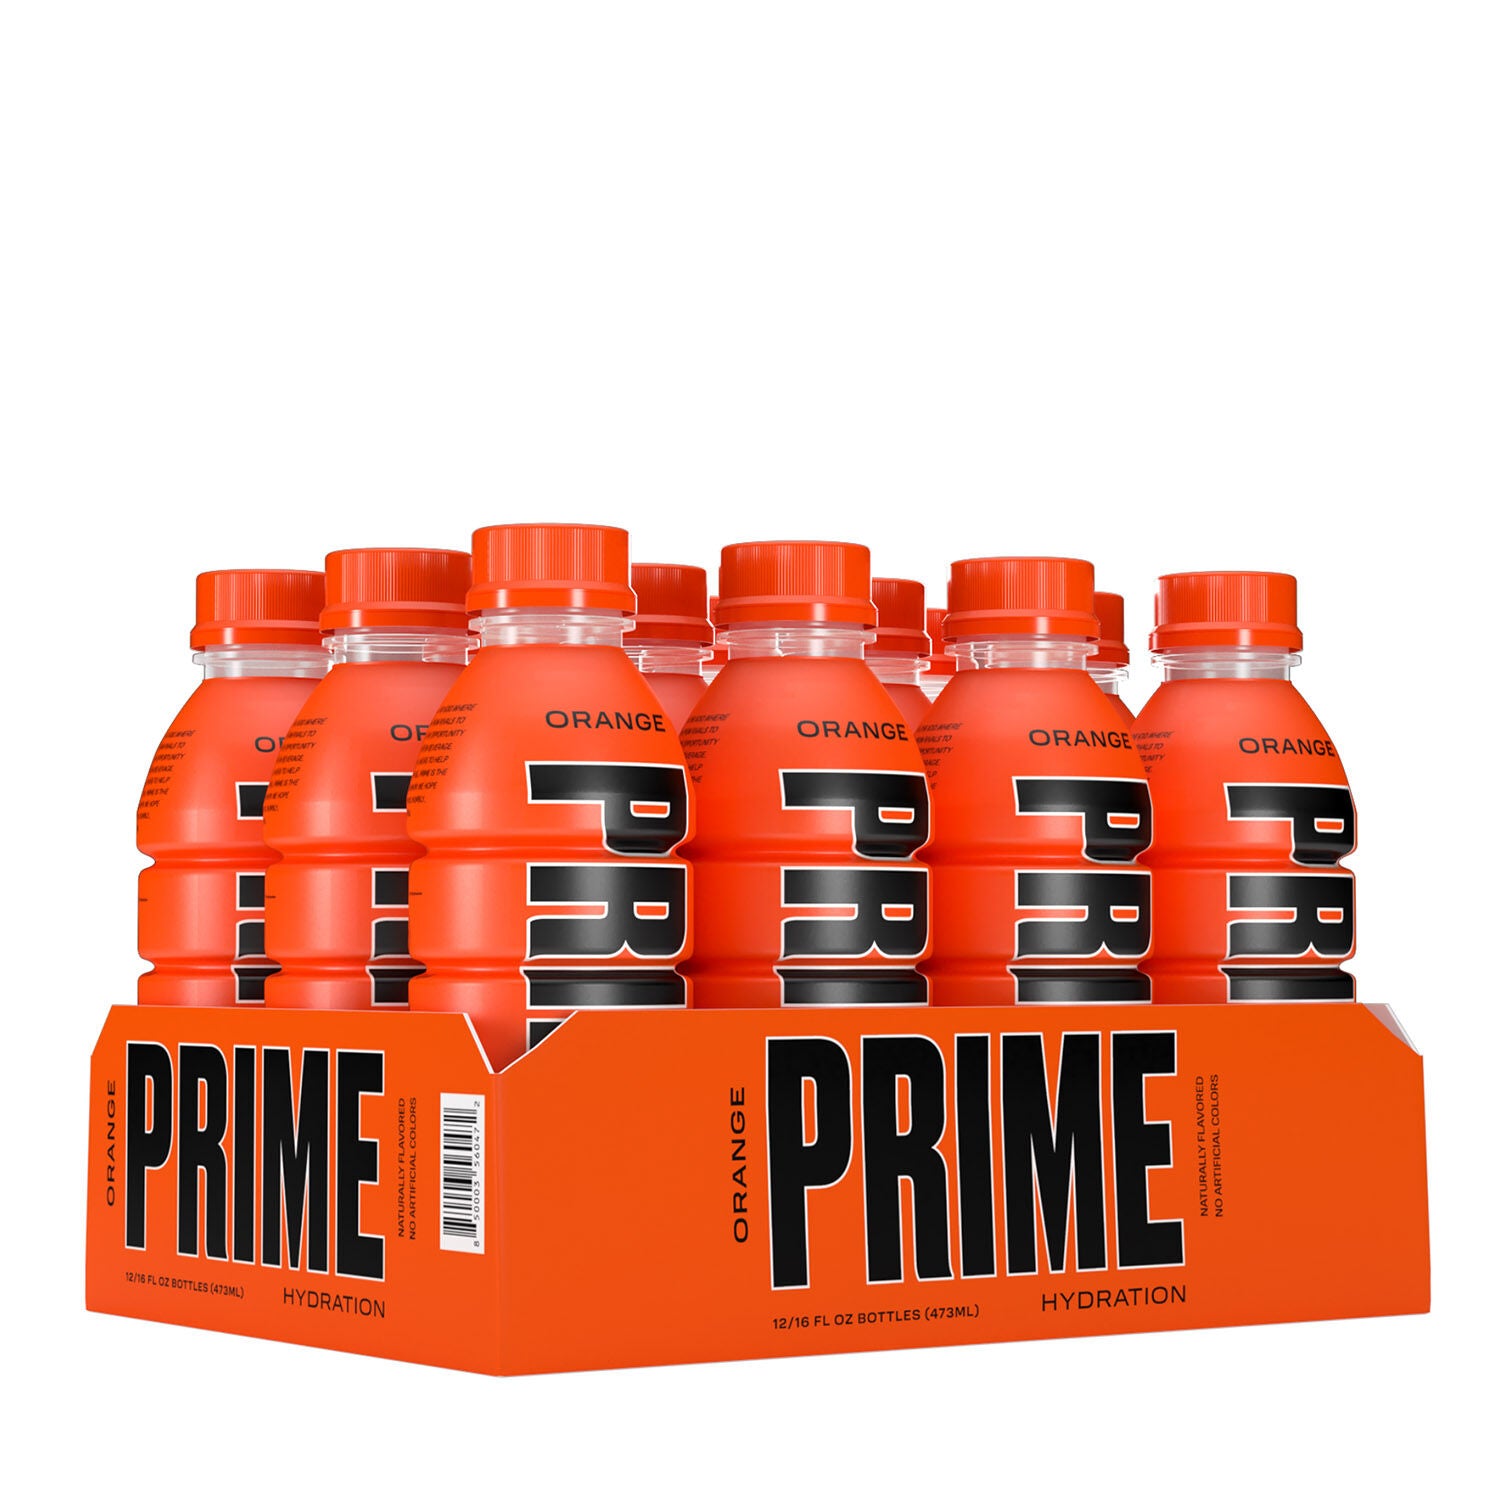 12 pack of bottle of Orange Prime